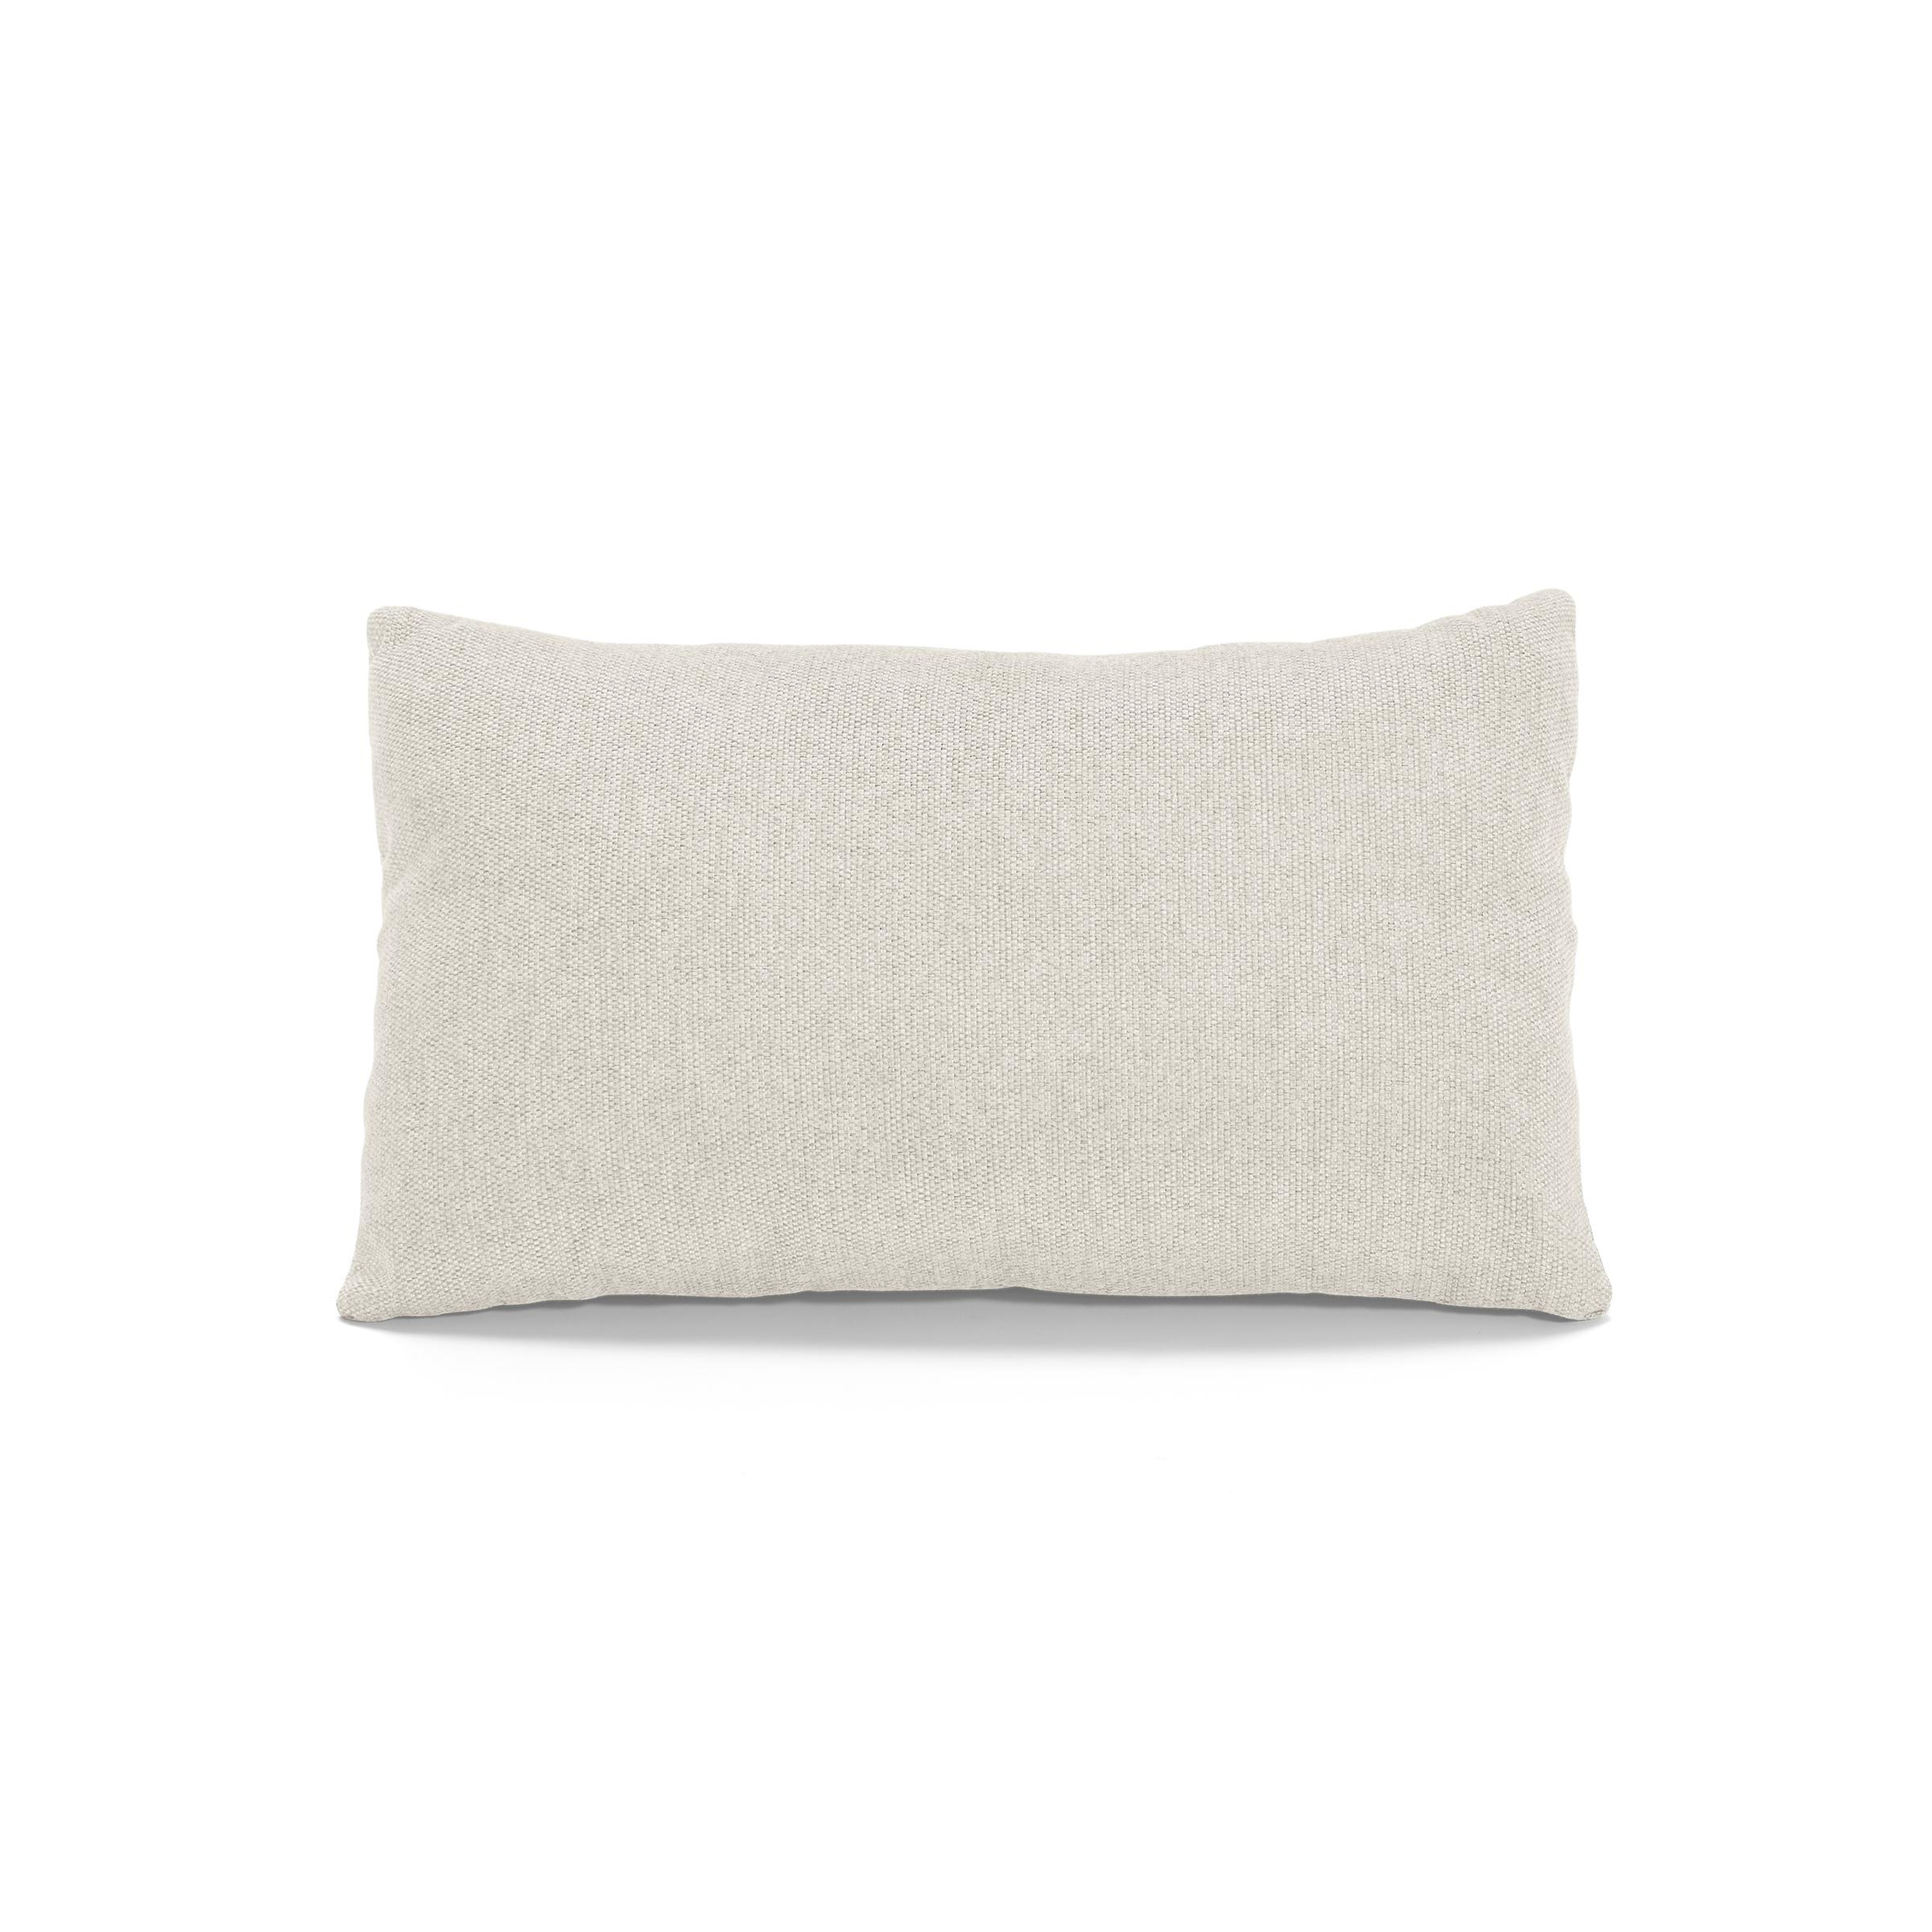 Nomad Lumbar Pillow in Ivory - Burrow